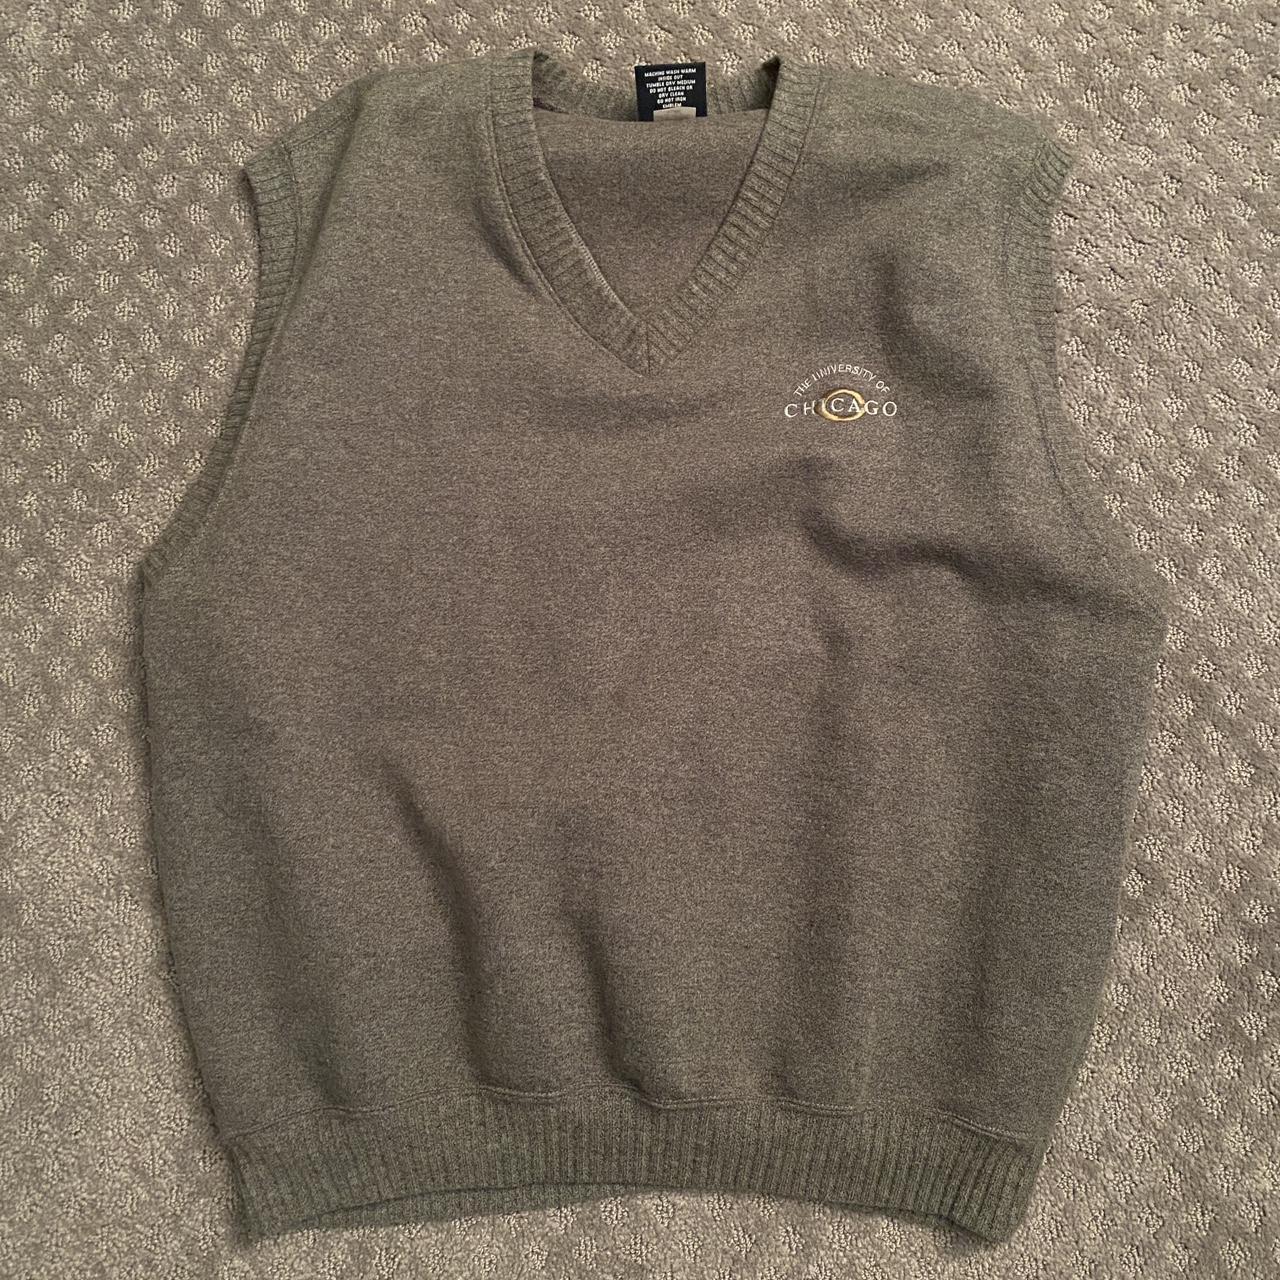 Sweater Vest - University of Chicago - Grey/olive... - Depop